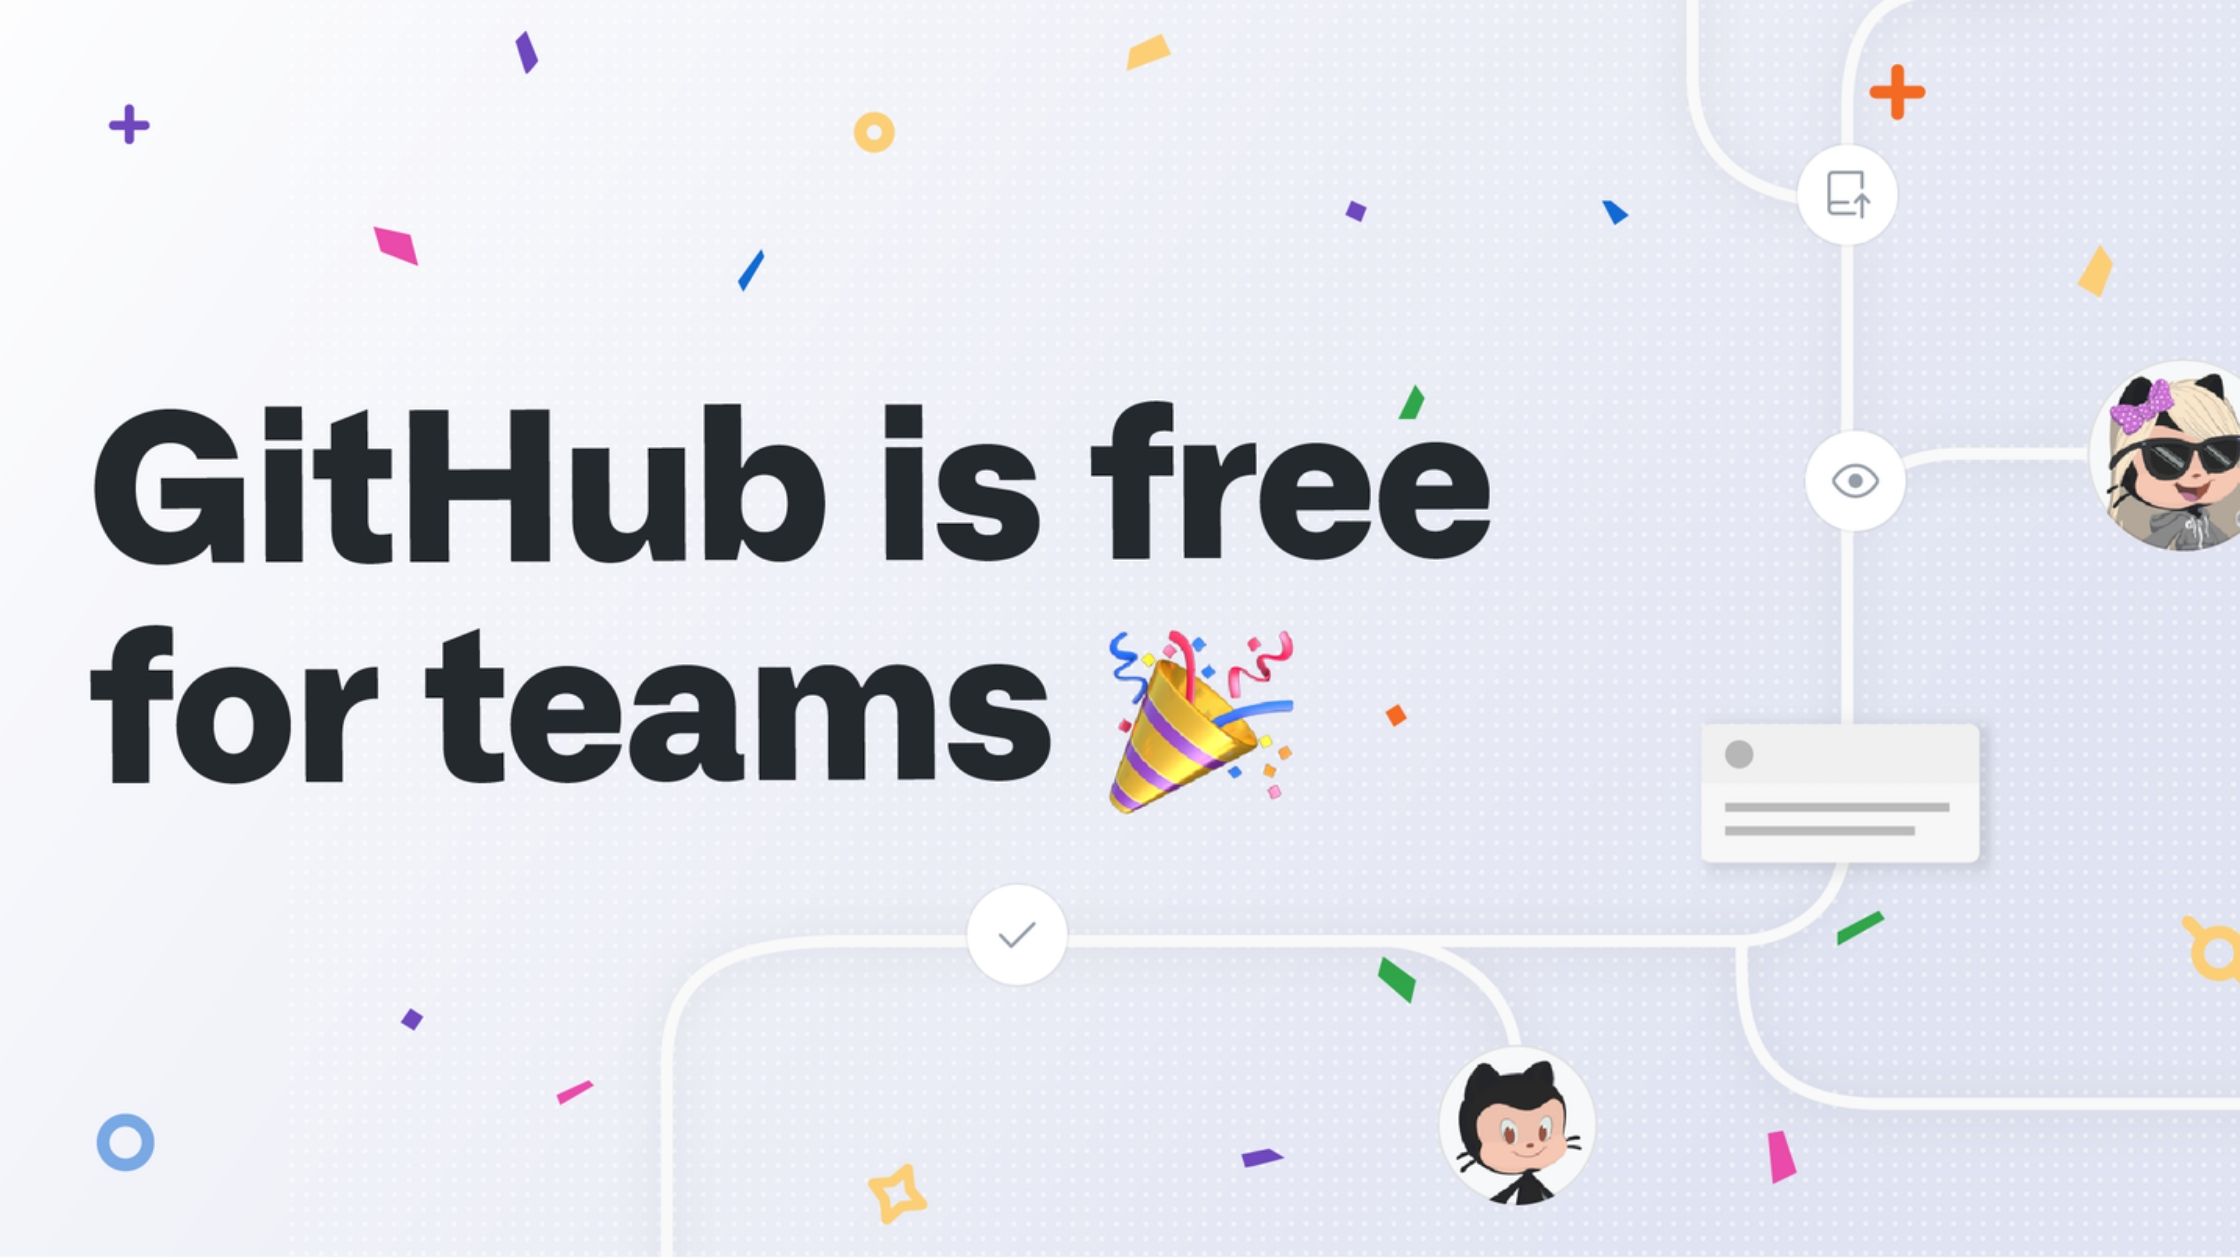 Github teams is free for everyone